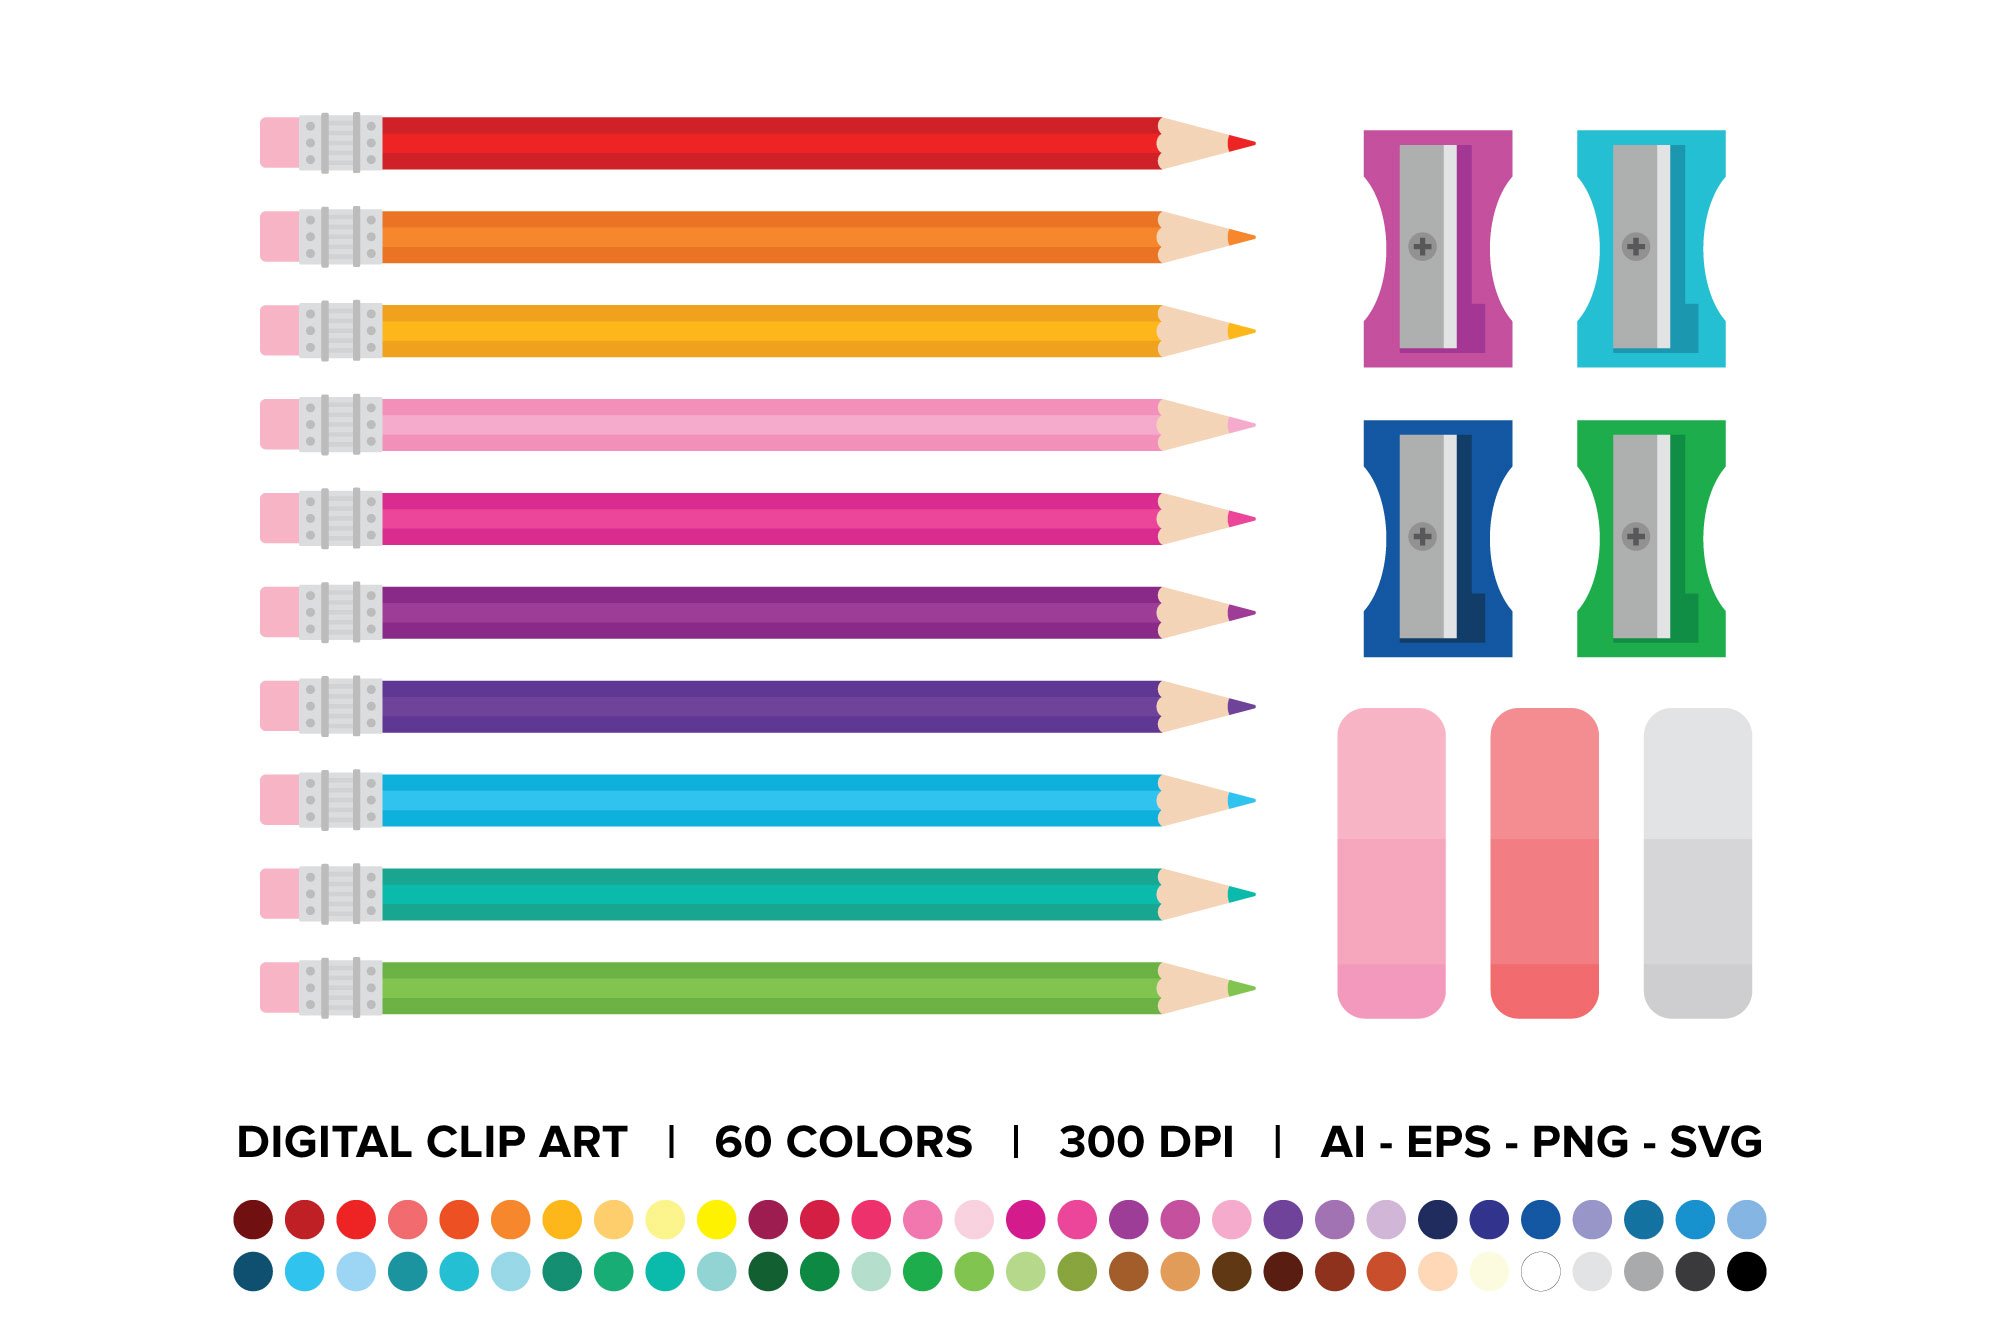 Color Pencil, Sharpener, and Eraser cover image.